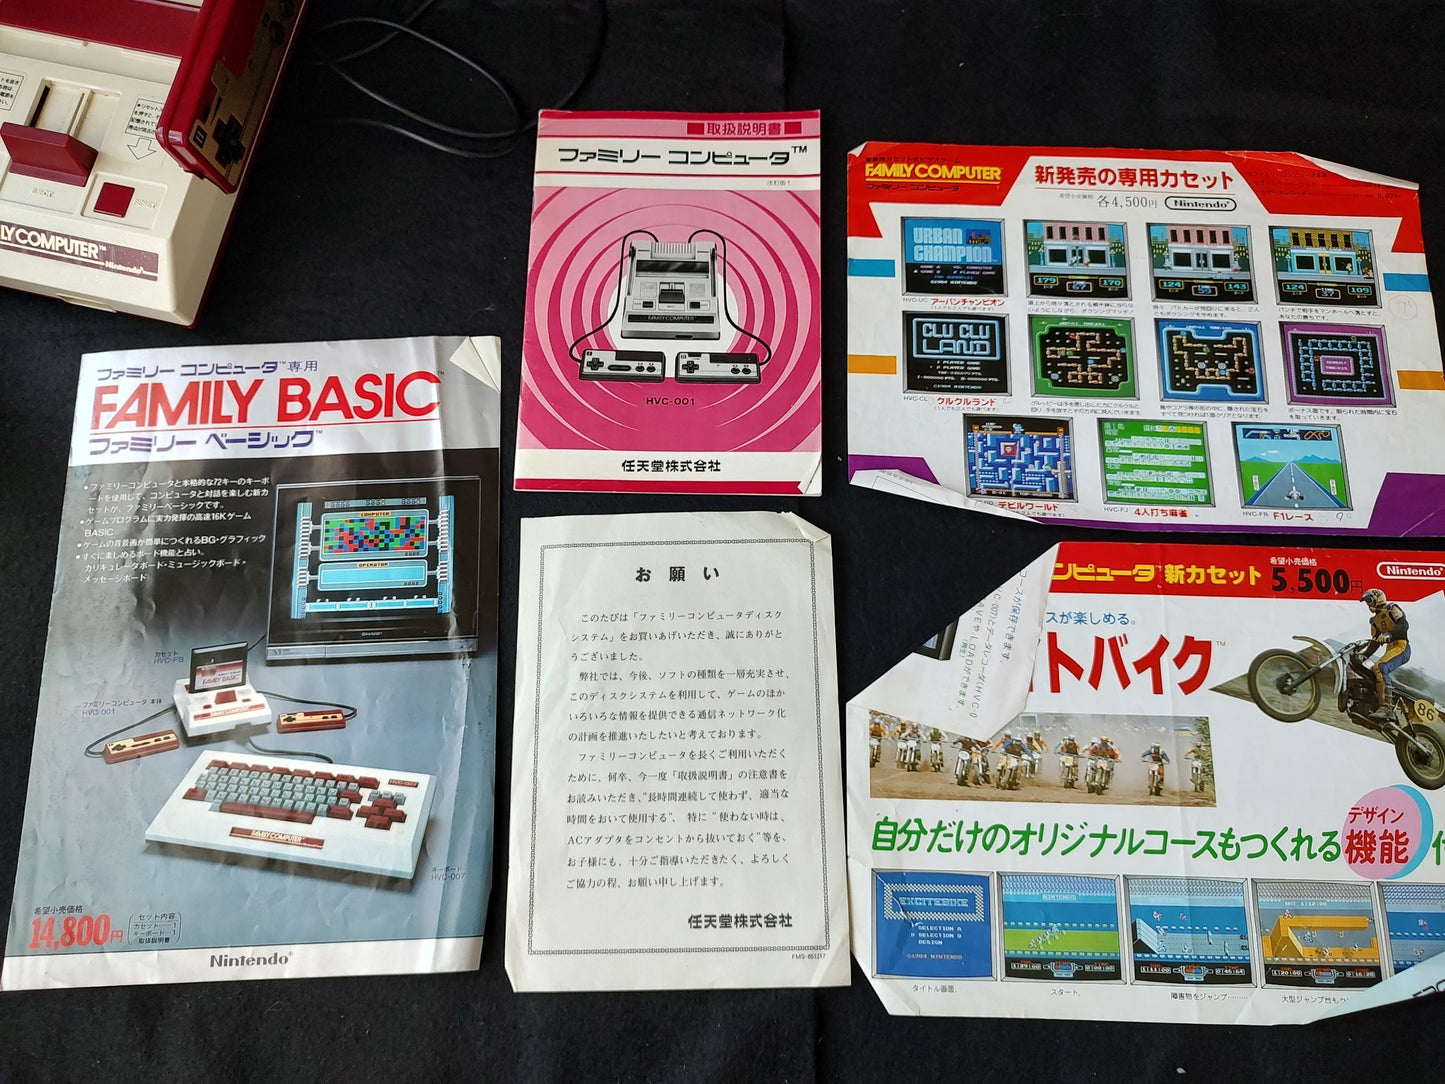 Nintendo Famicom NES HVC-001 Console, PSU, Manual, Flyer set, Working -f0603-